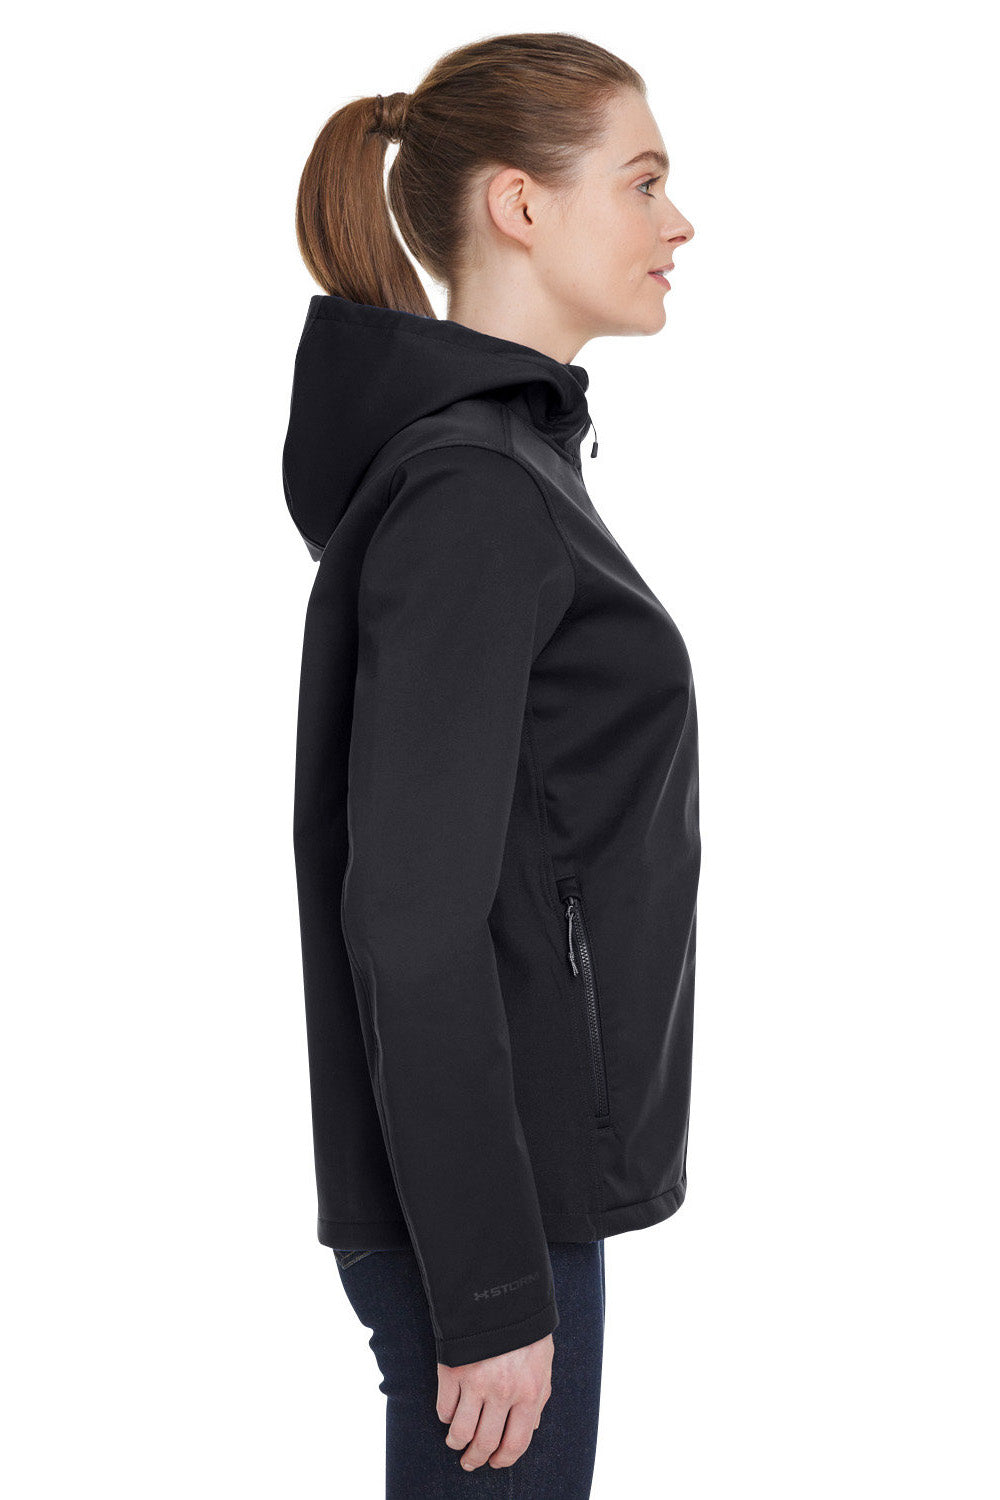 Under Armour 1371595 Womens CGI Shield 2.0 Windproof & Waterproof Full Zip Hooded Jacket Black Model Side